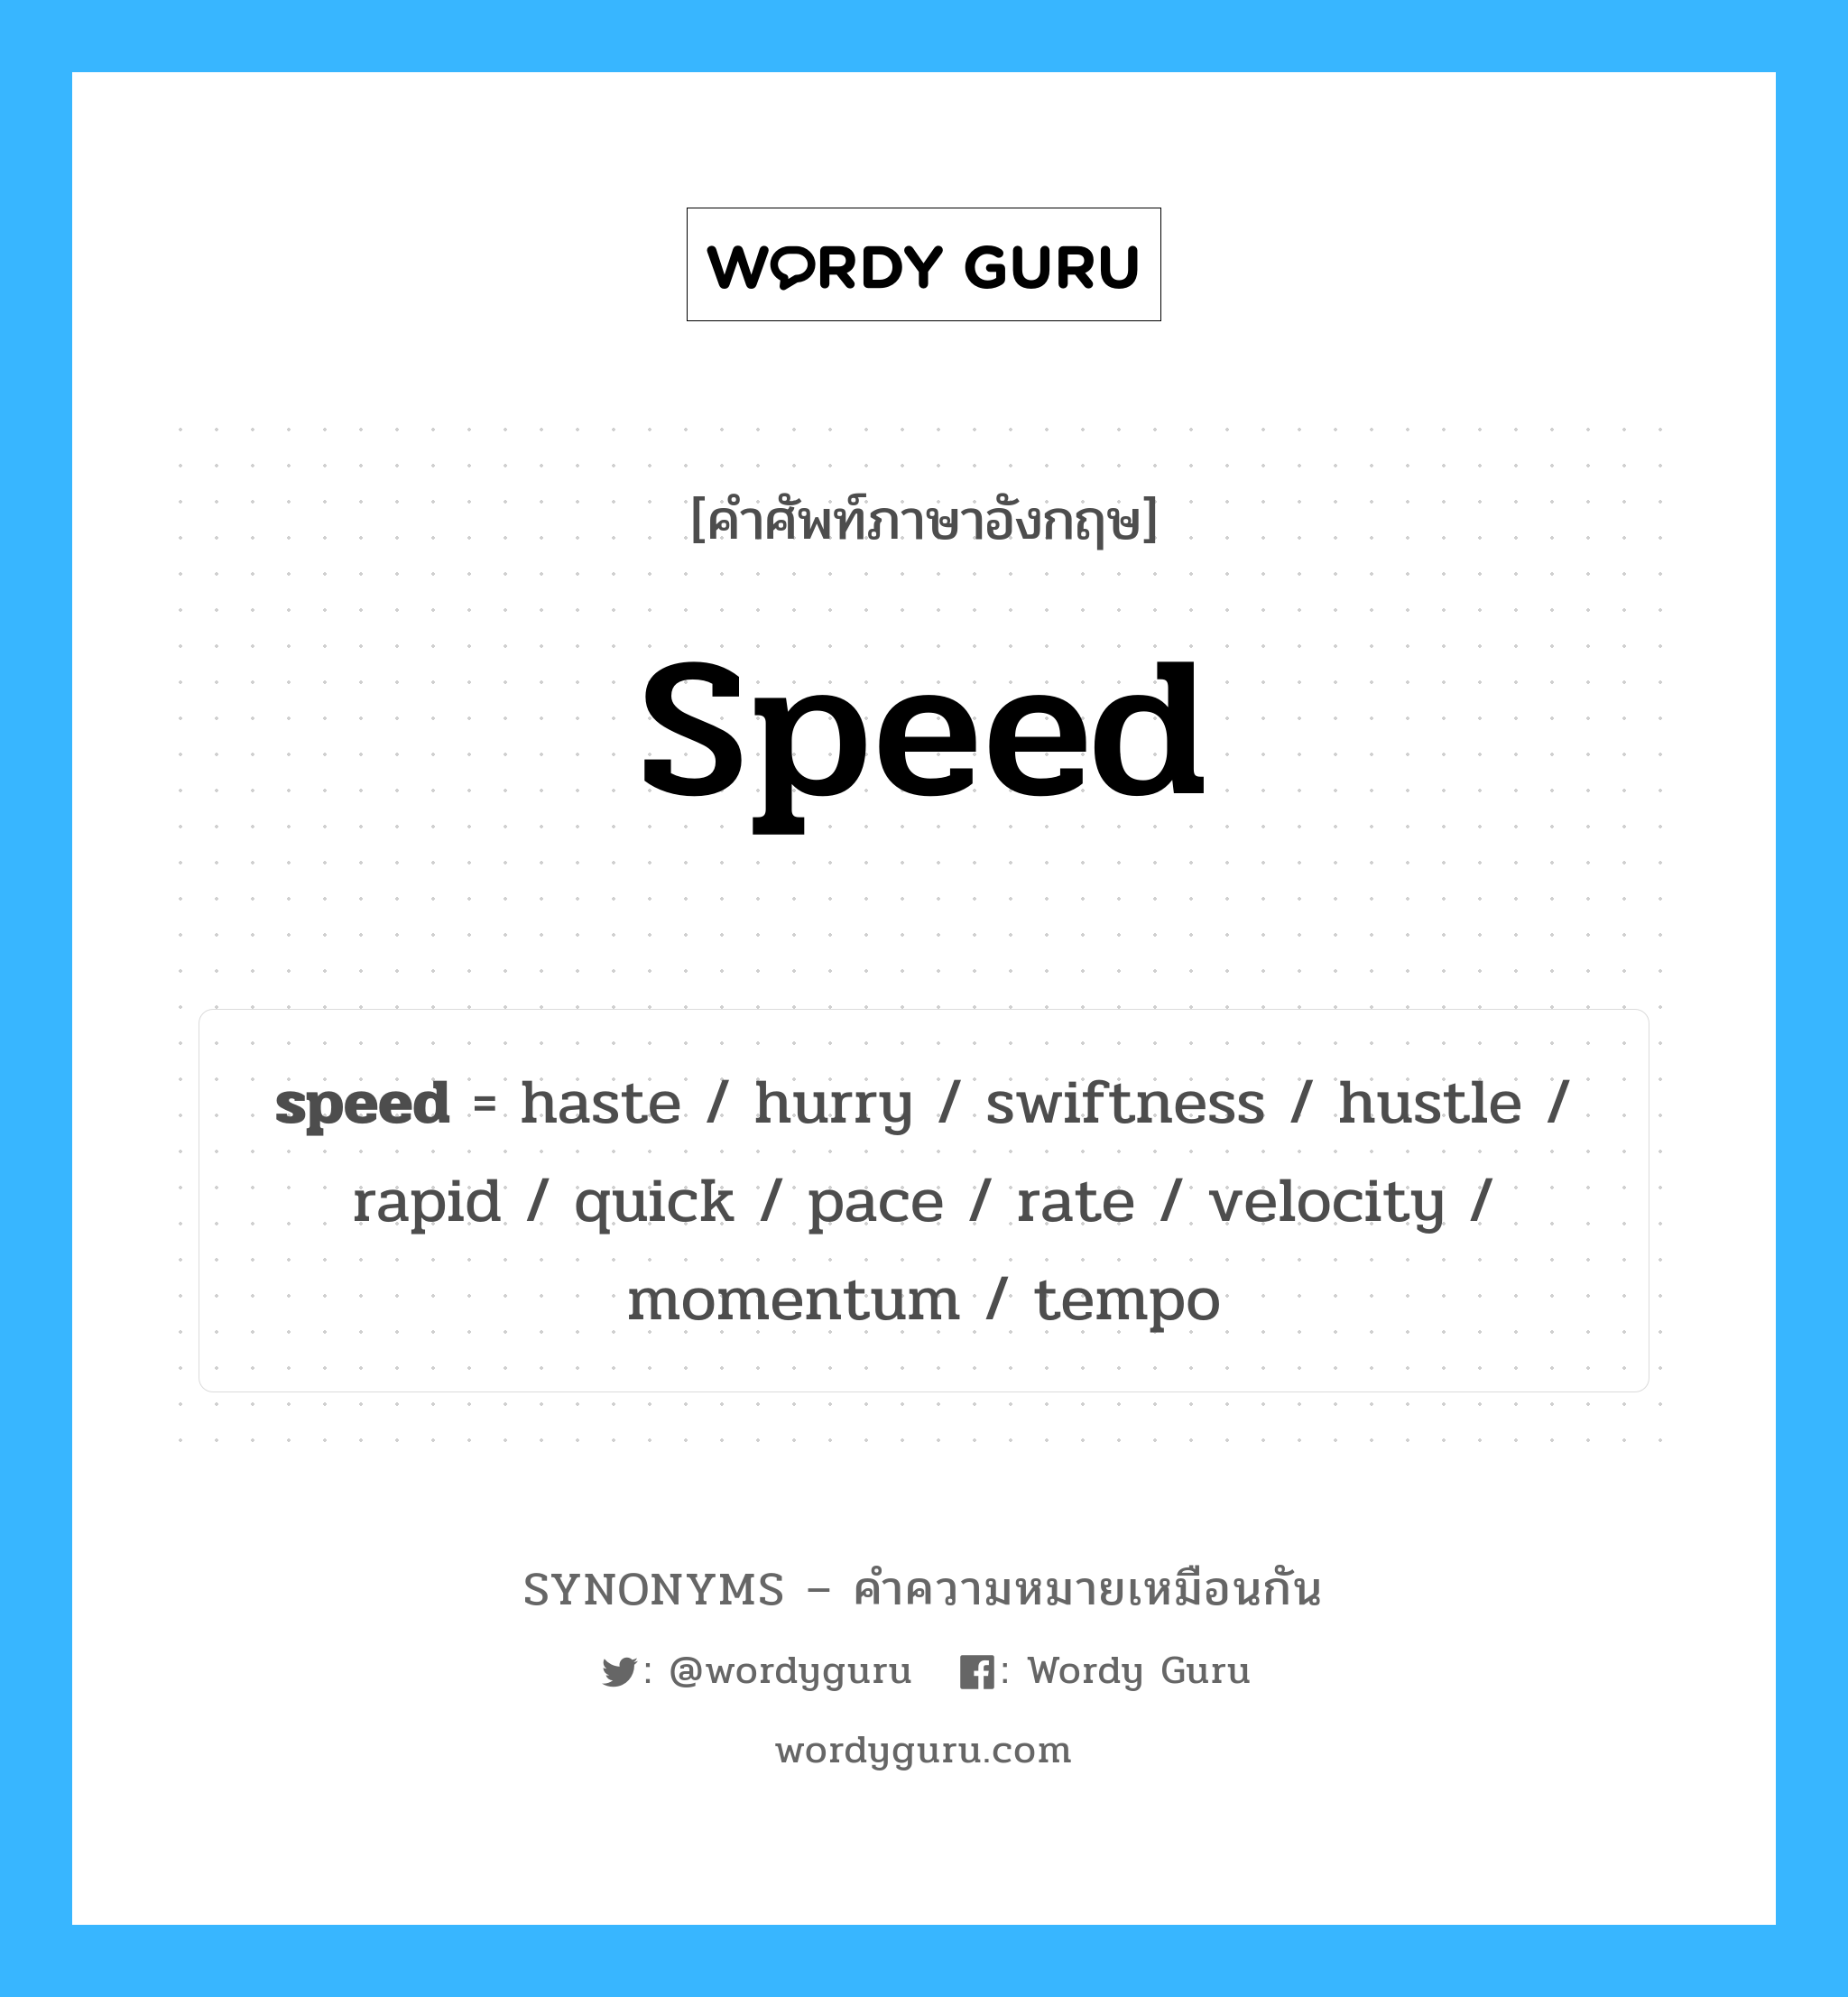 speed เป็นหนึ่งใน hustle และมีคำอื่น ๆ อีกดังนี้, คำศัพท์ภาษาอังกฤษ speed ความหมายคล้ายกันกับ hustle แปลว่า ความเร่งรีบ หมวด hustle